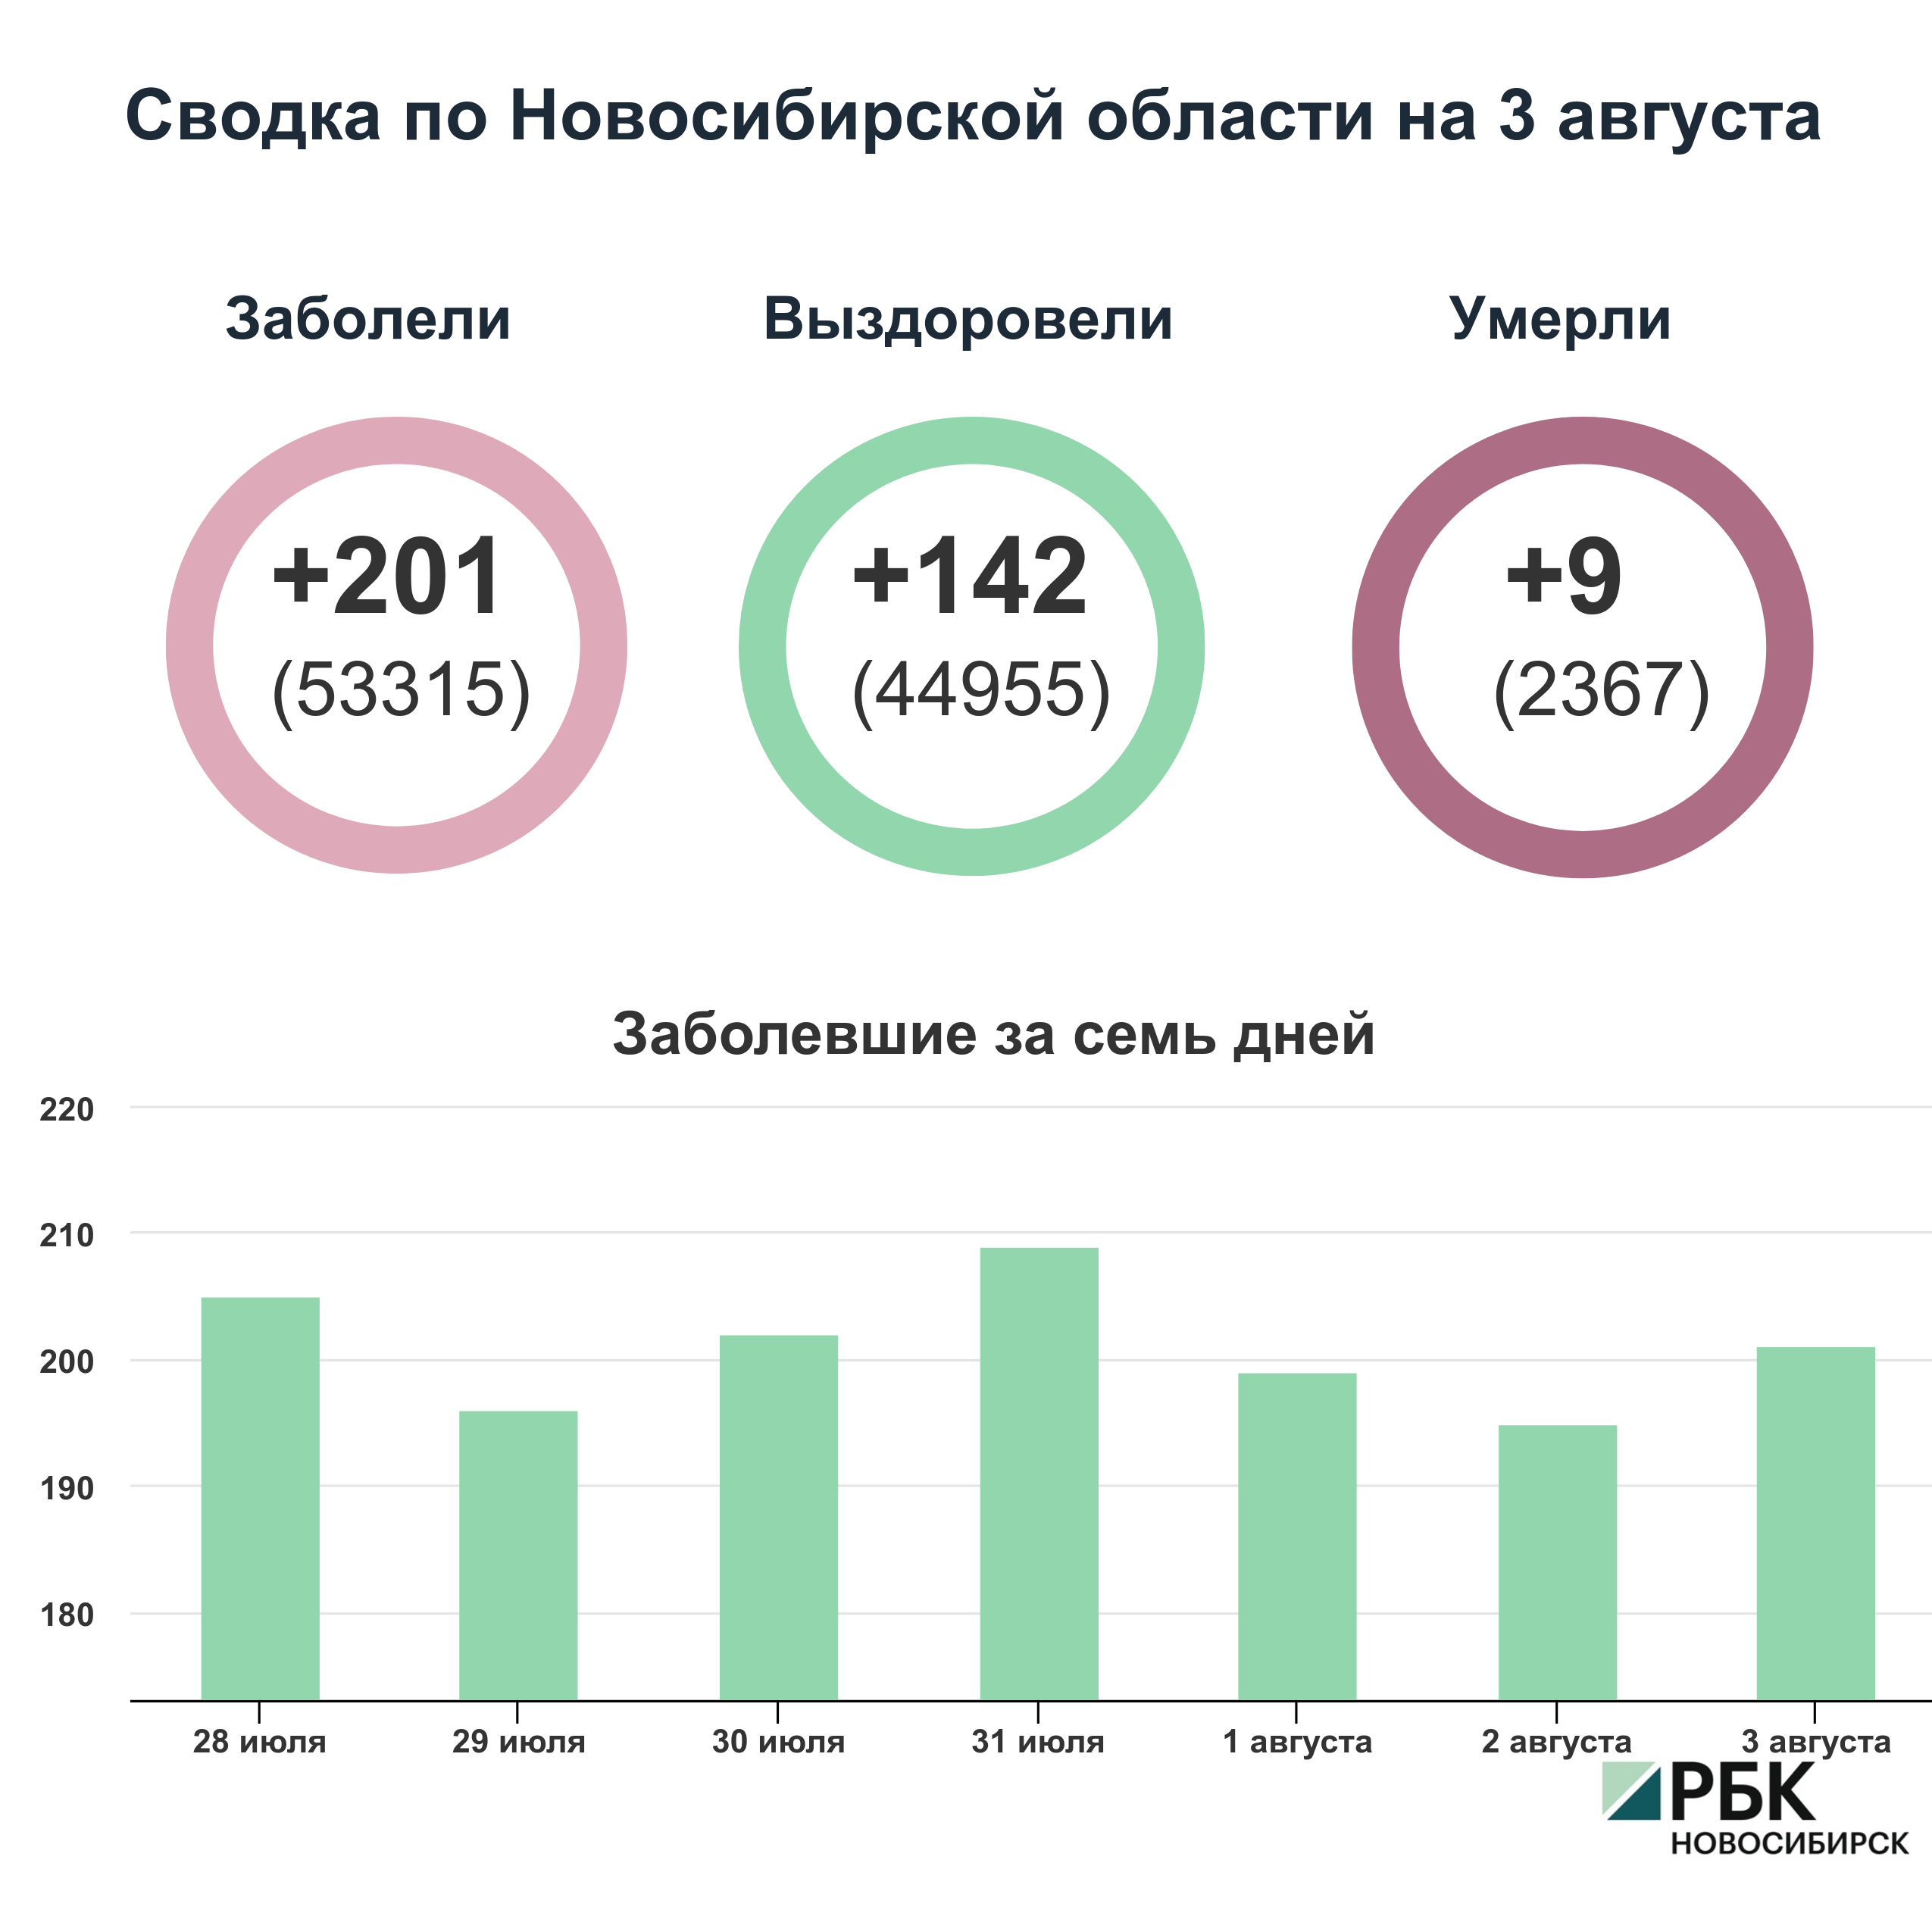 Коронавирус в Новосибирске: сводка на 3 августа